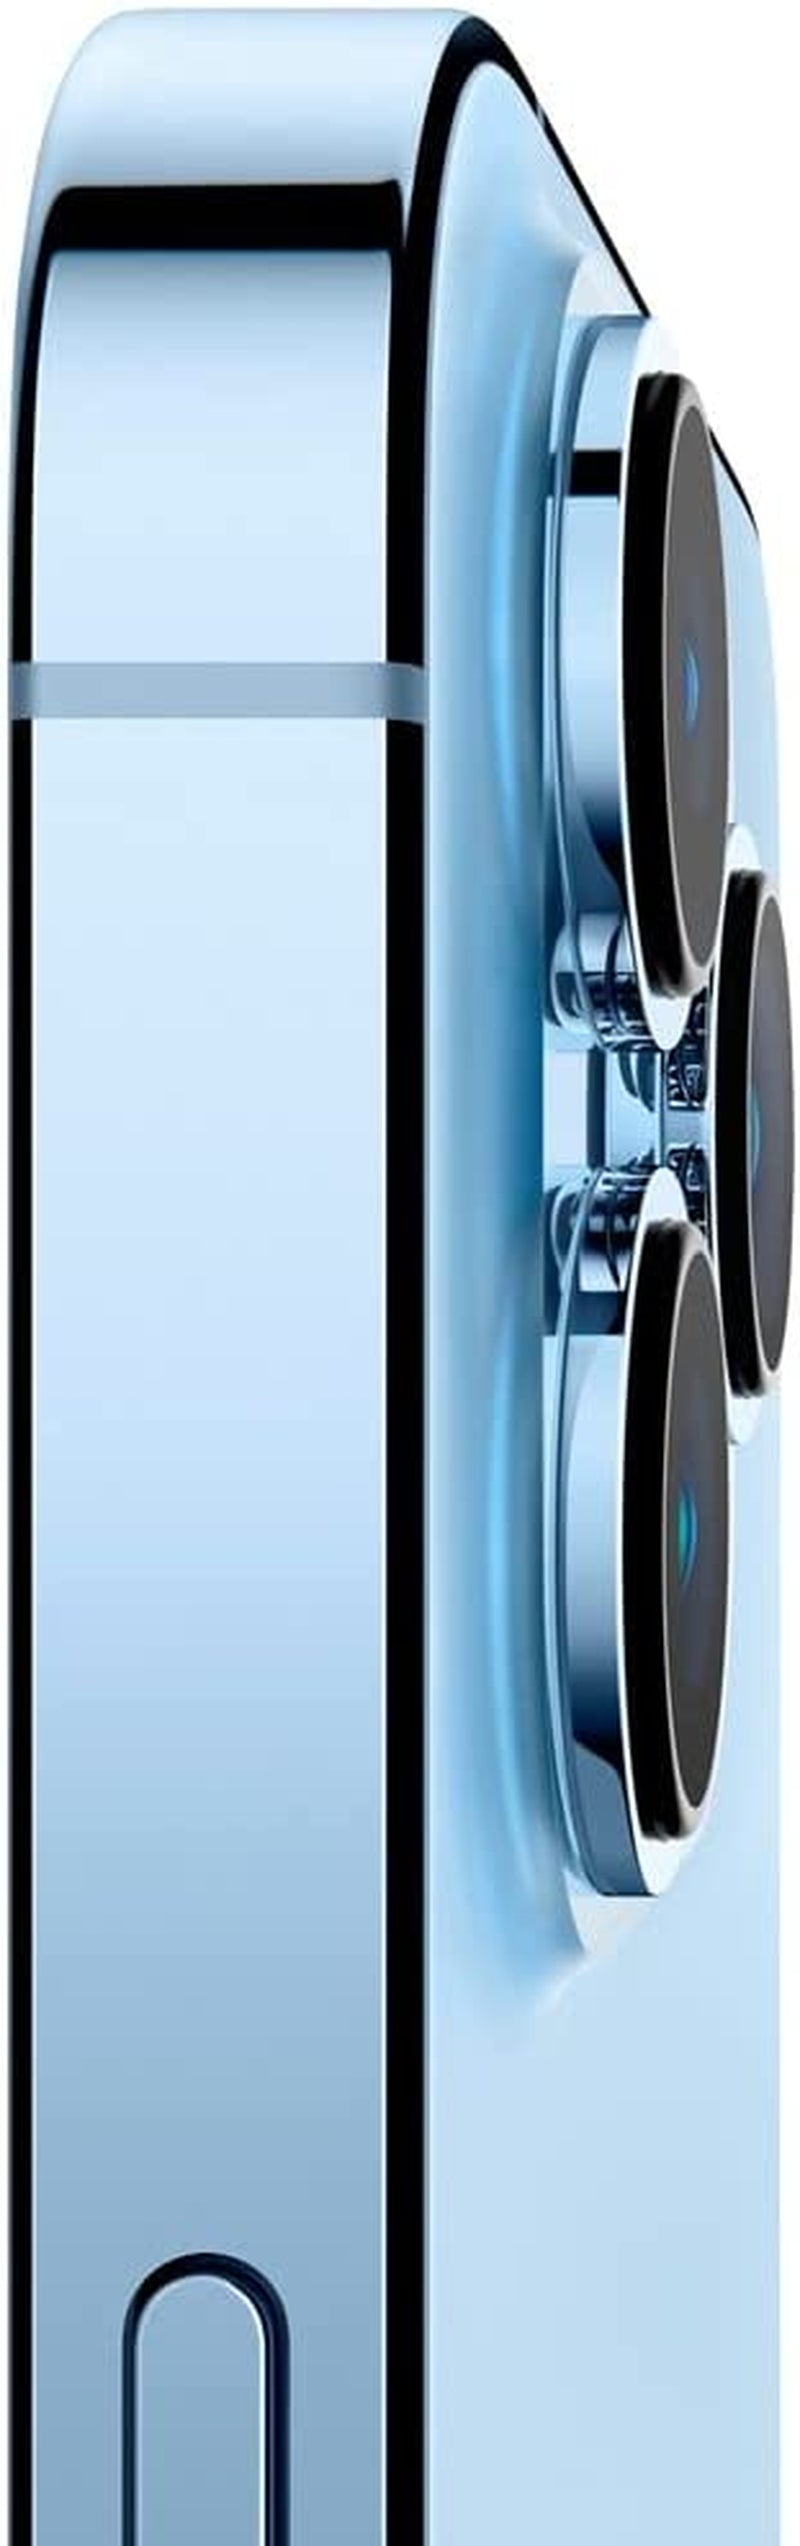 iPhone 13 Pro 128GB in Sierra Blue (Renewed) - Growing Apex Tech